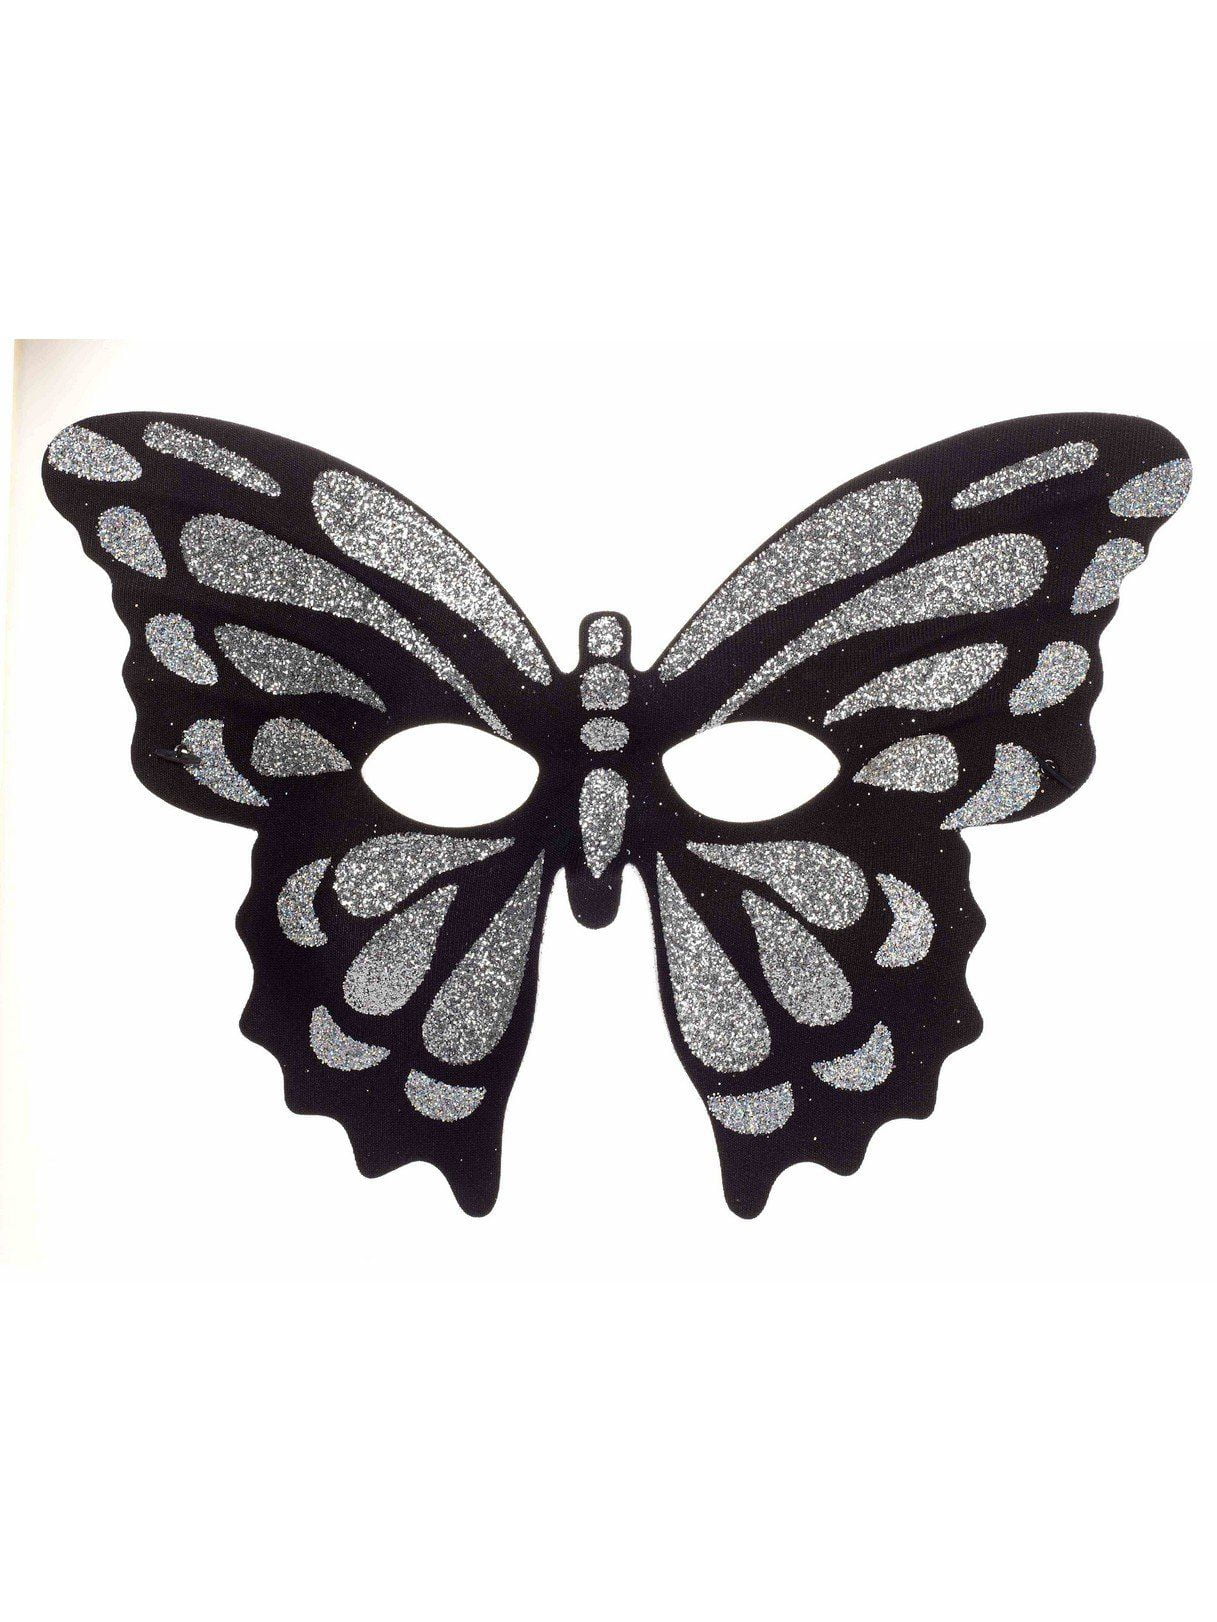 Silver Glitter Butterfly Mask - Walmart.com